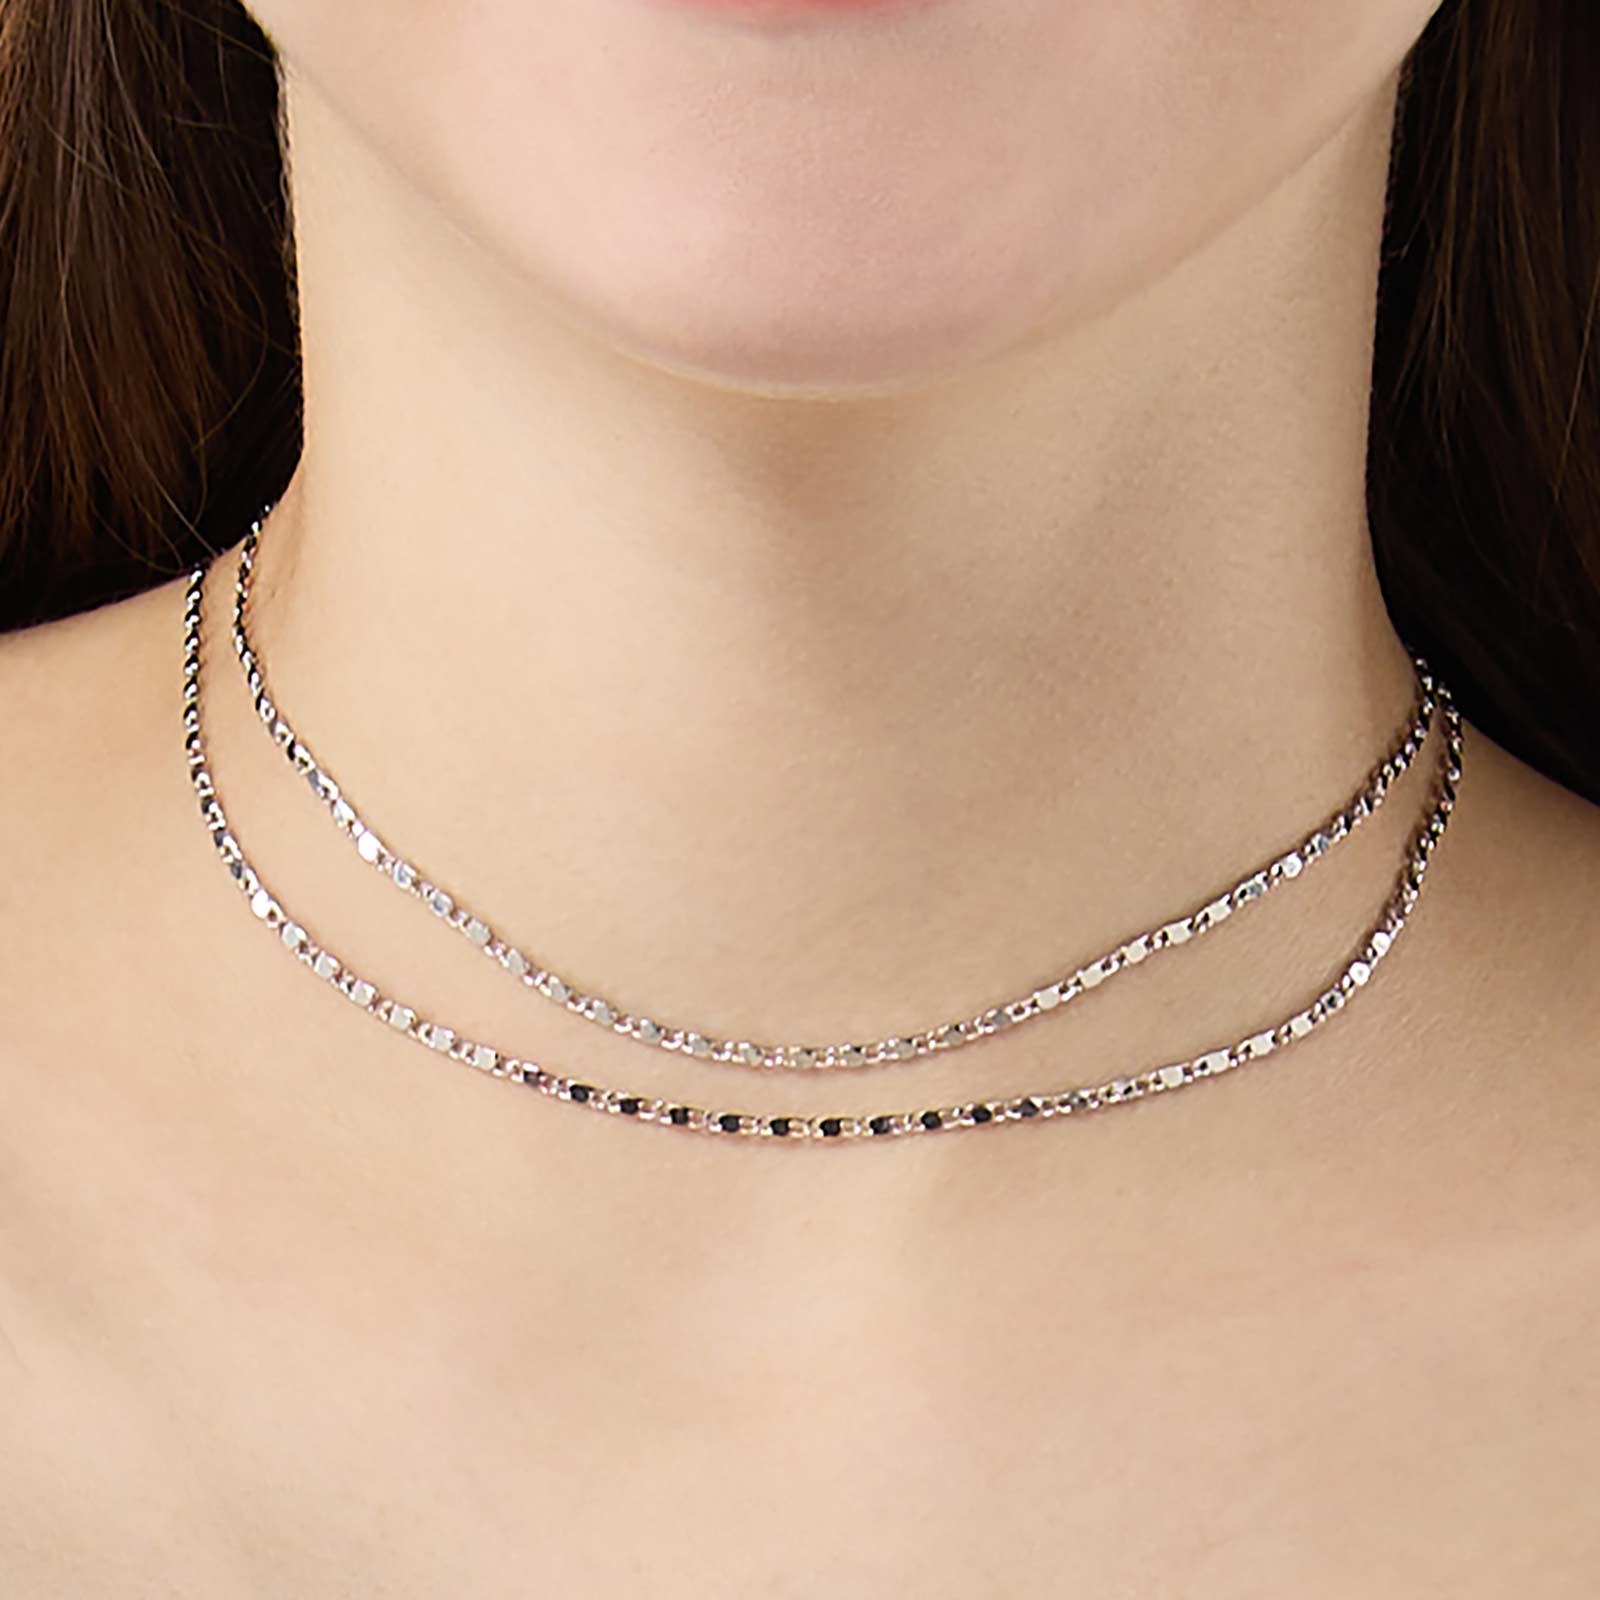 Silverfärgat halsband / Belly Chain - kedja 70+6cm